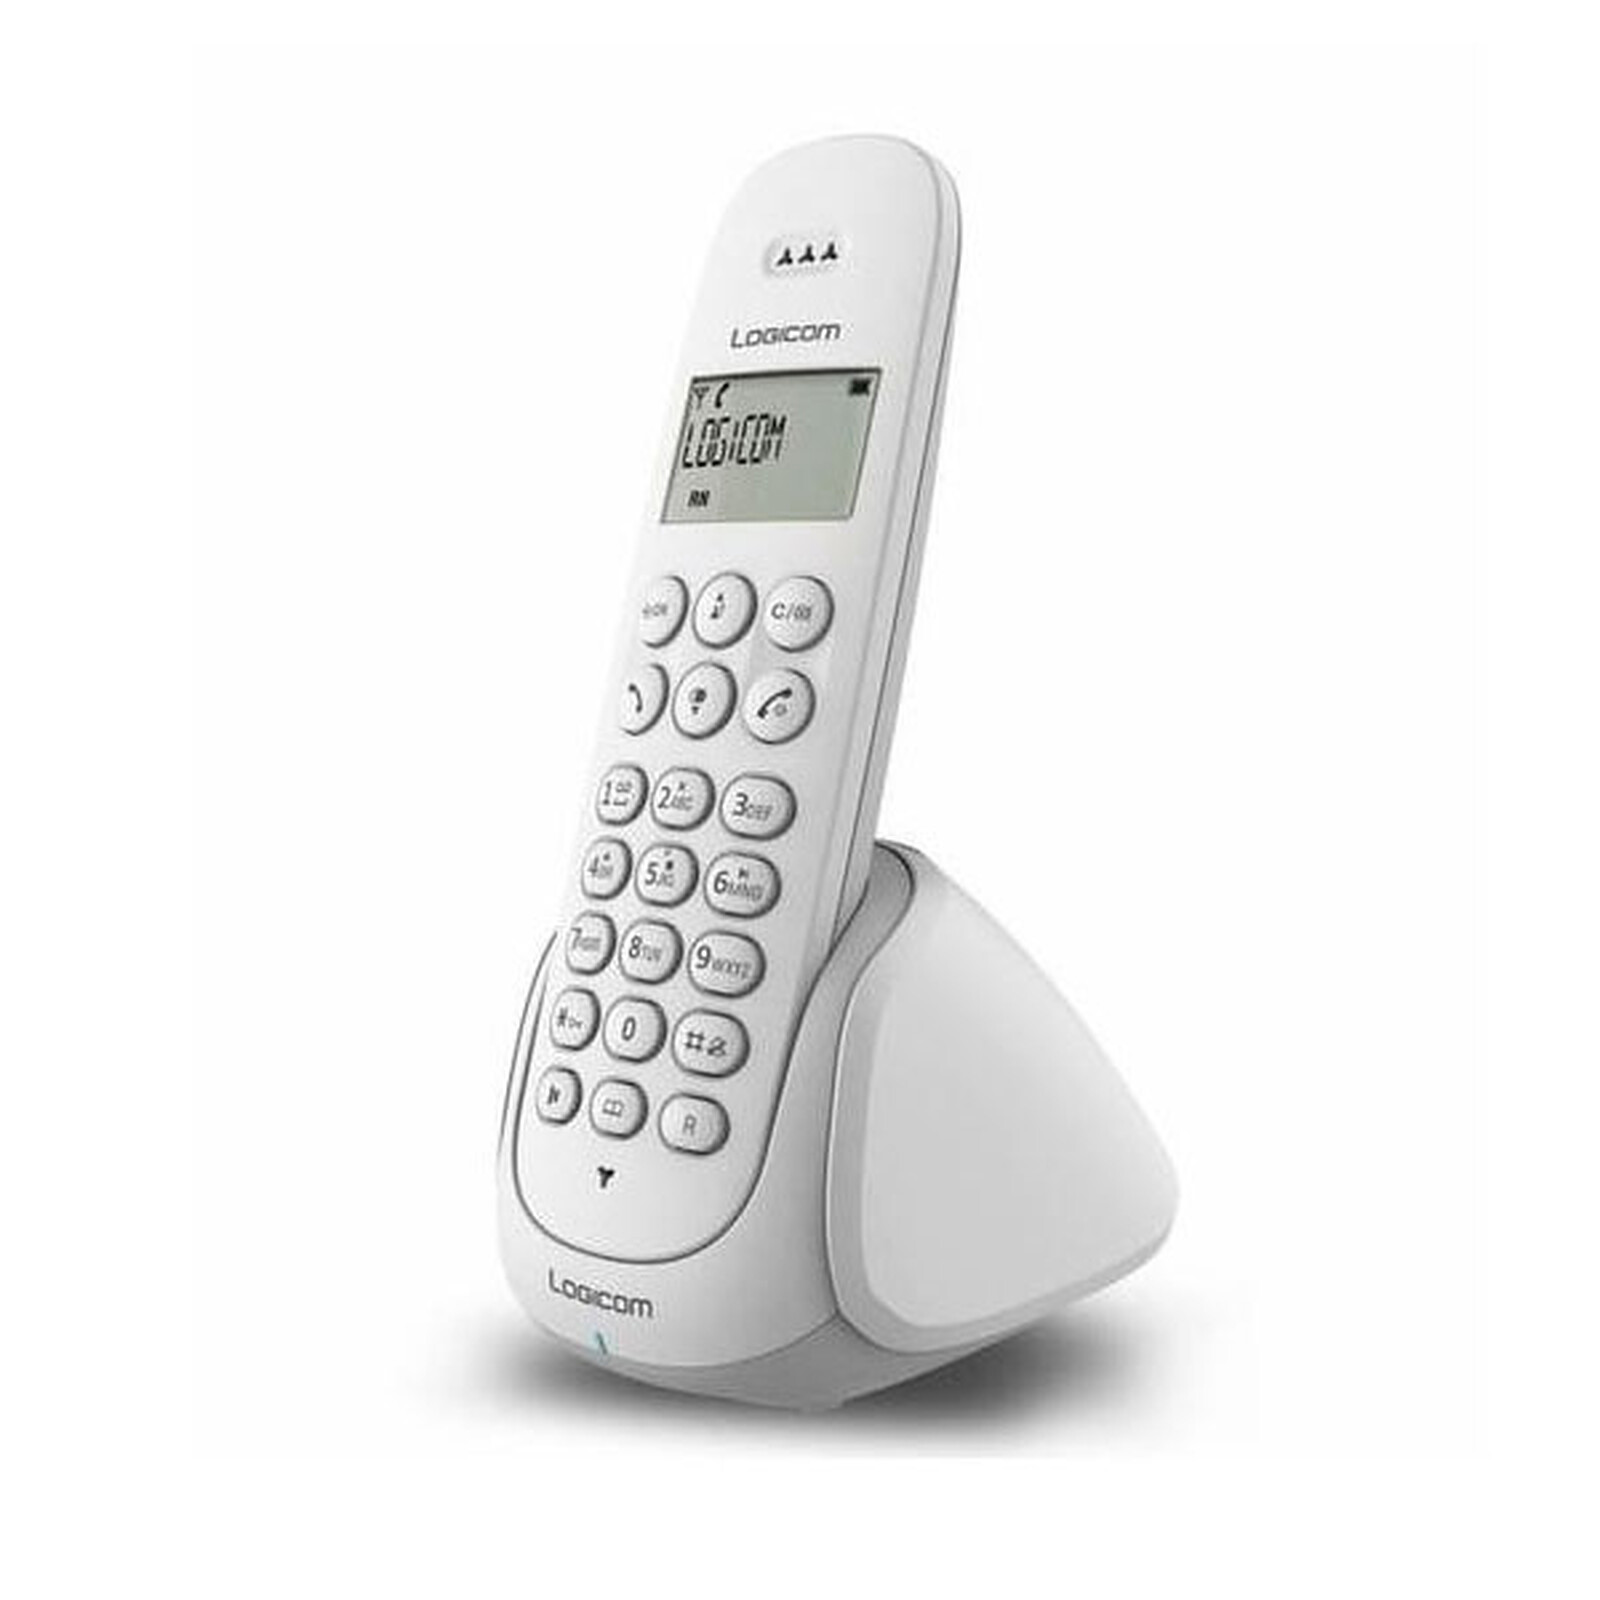 Logicom Aura 155T Blanc - Téléphone sans fil - Garantie 3 ans LDLC